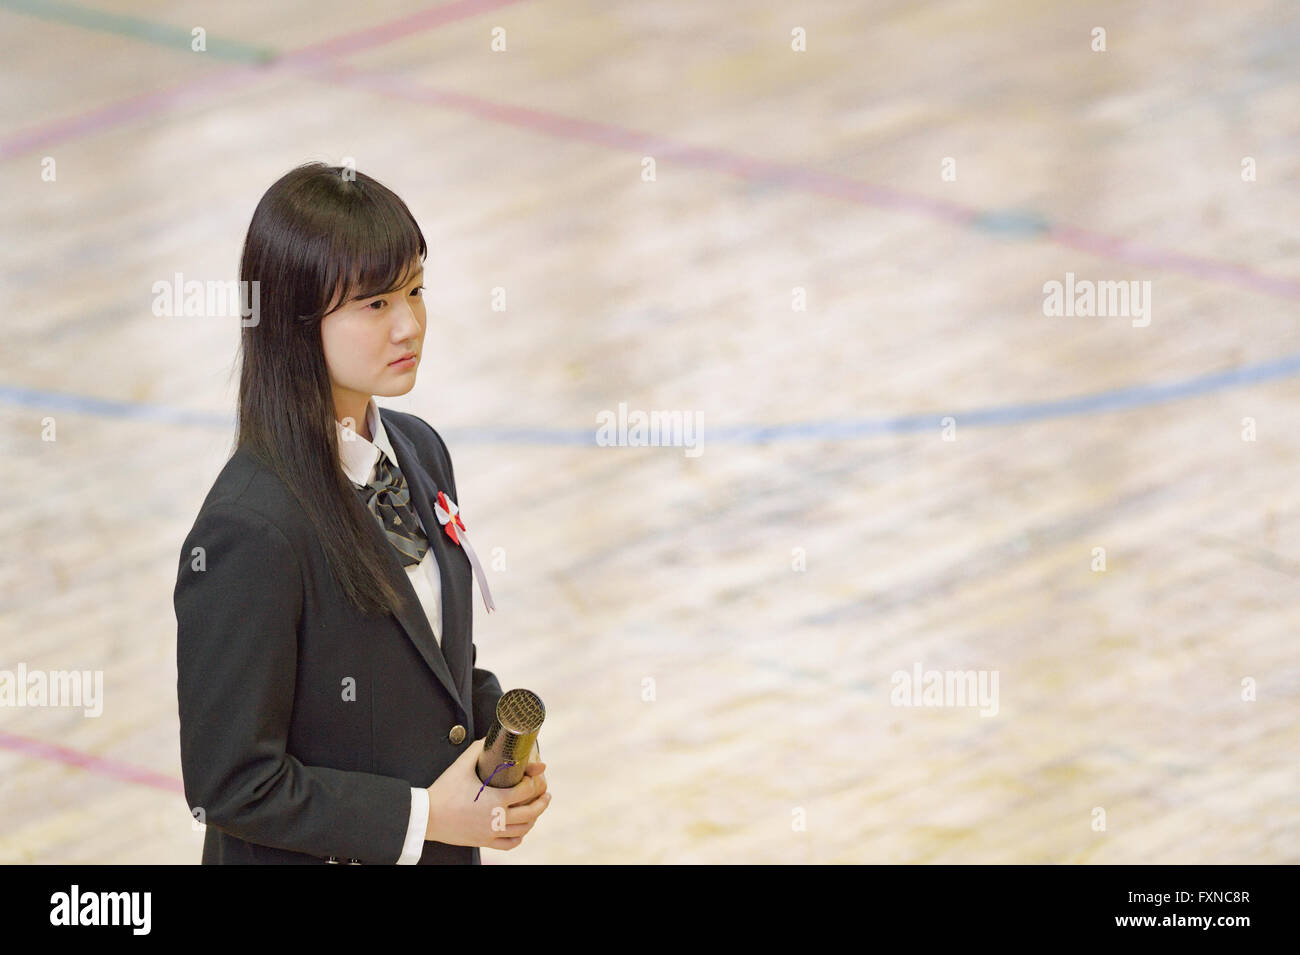 Japanische High-School-Abschlussfeier Stockfoto